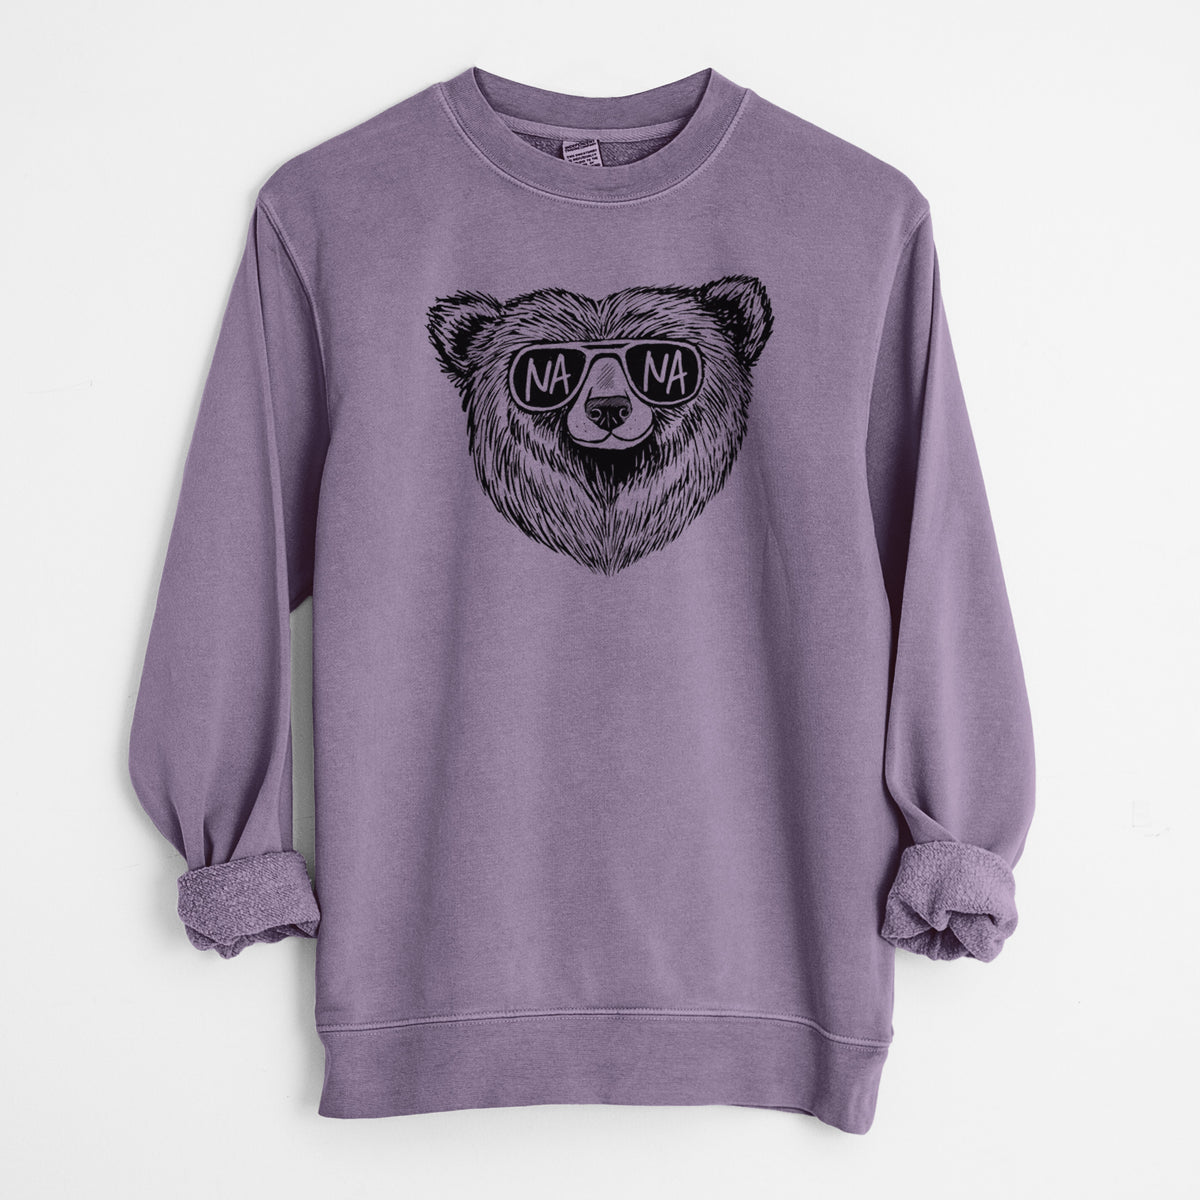 Nana Bear - Nana Glasses - Unisex Pigment Dyed Crew Sweatshirt